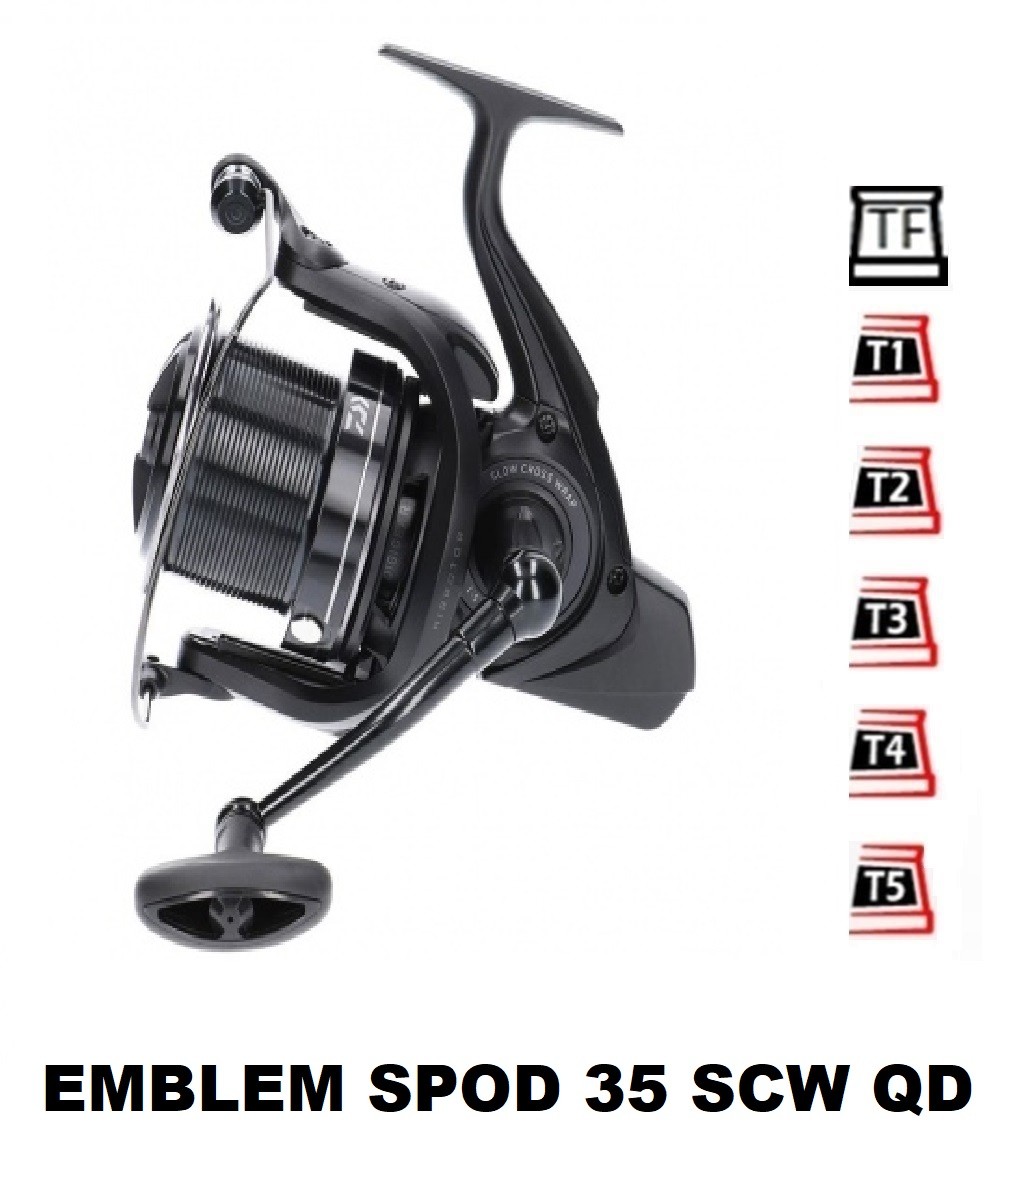 19 Emblem Spod 35 SCW QD [2020] Spare Spools